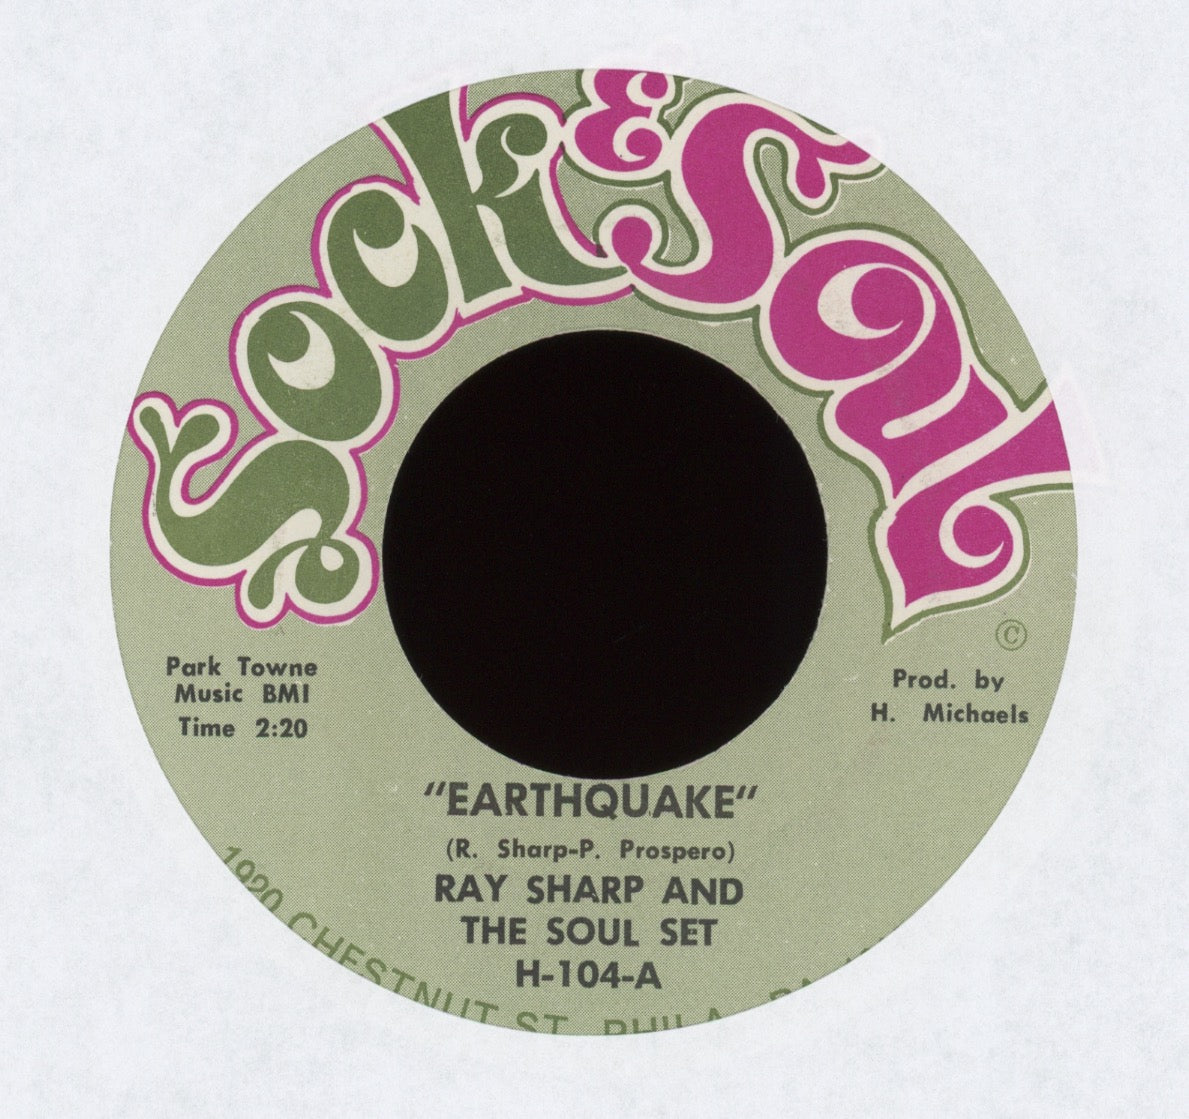 Ray Sharp And The Soul Set - Earthquake on Sock & Soul